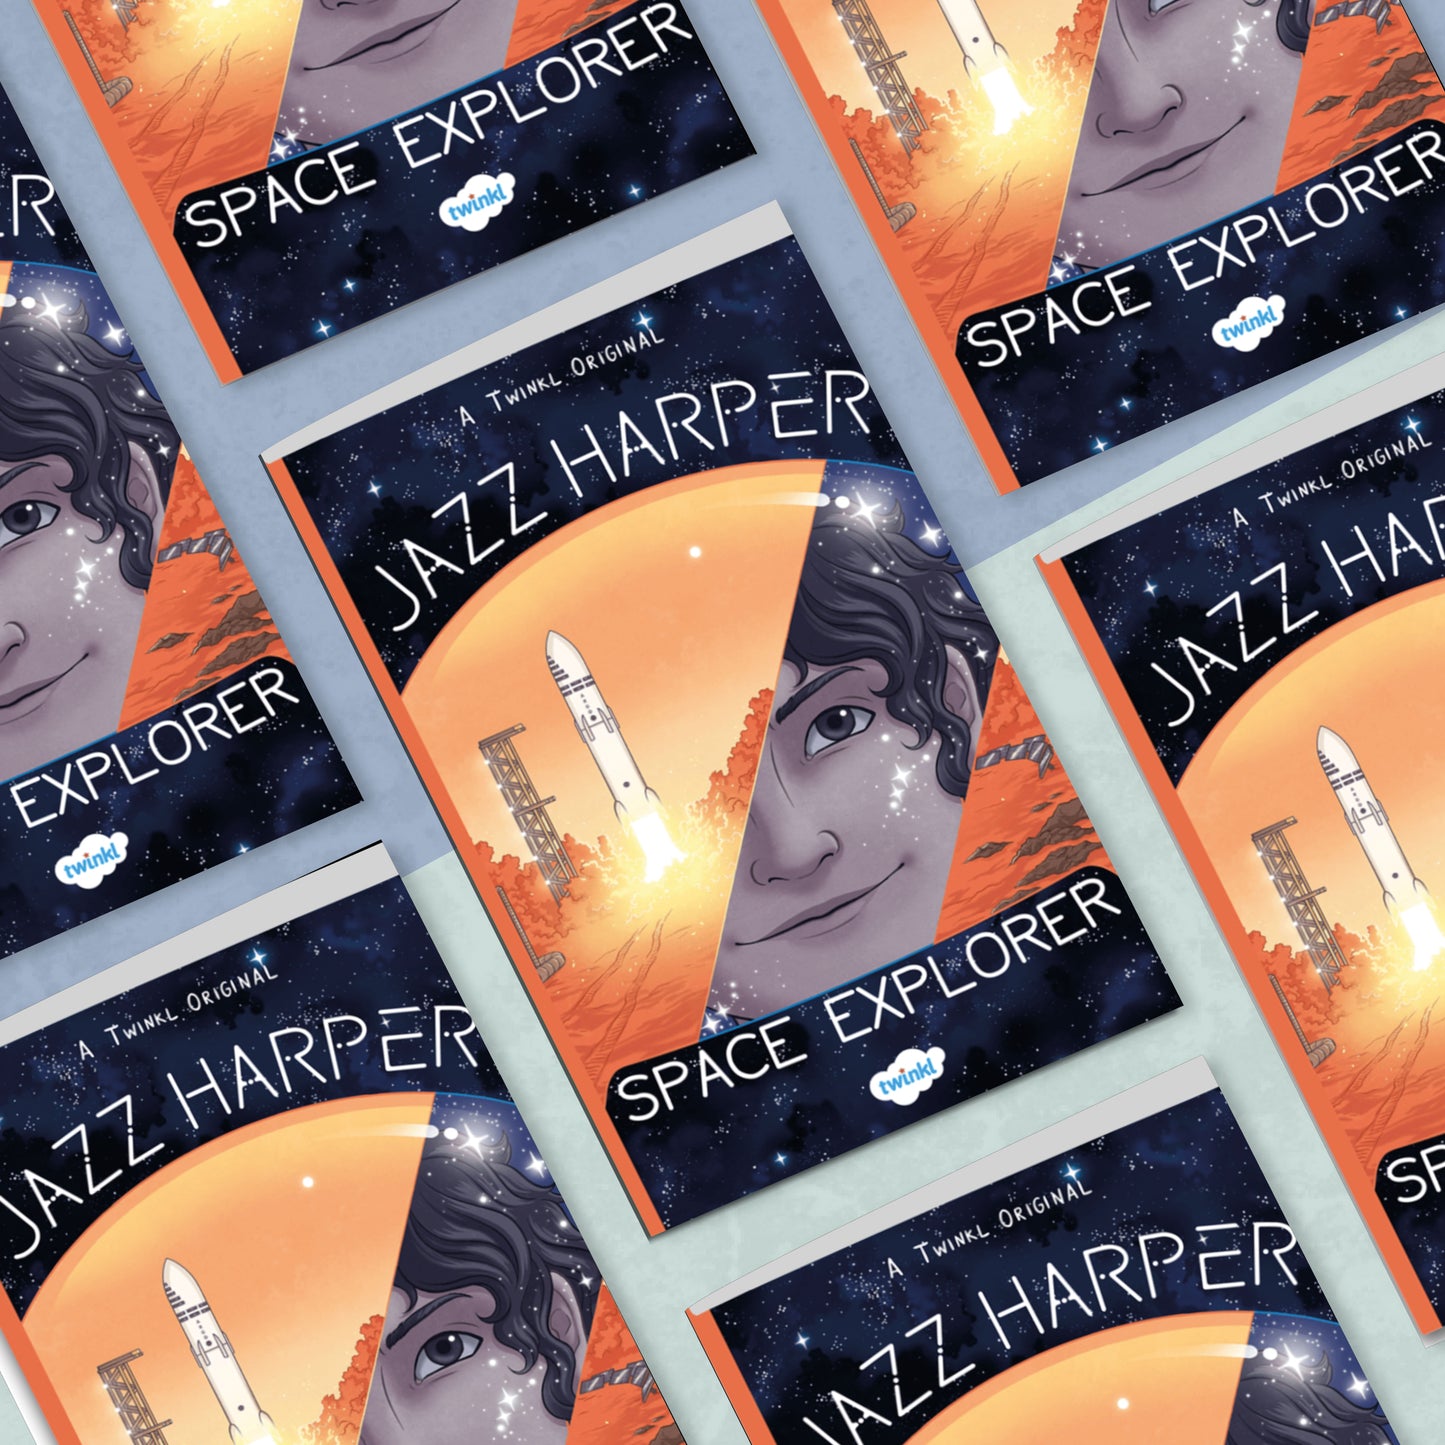 Jazz Harper: Space Explorer (7-11)